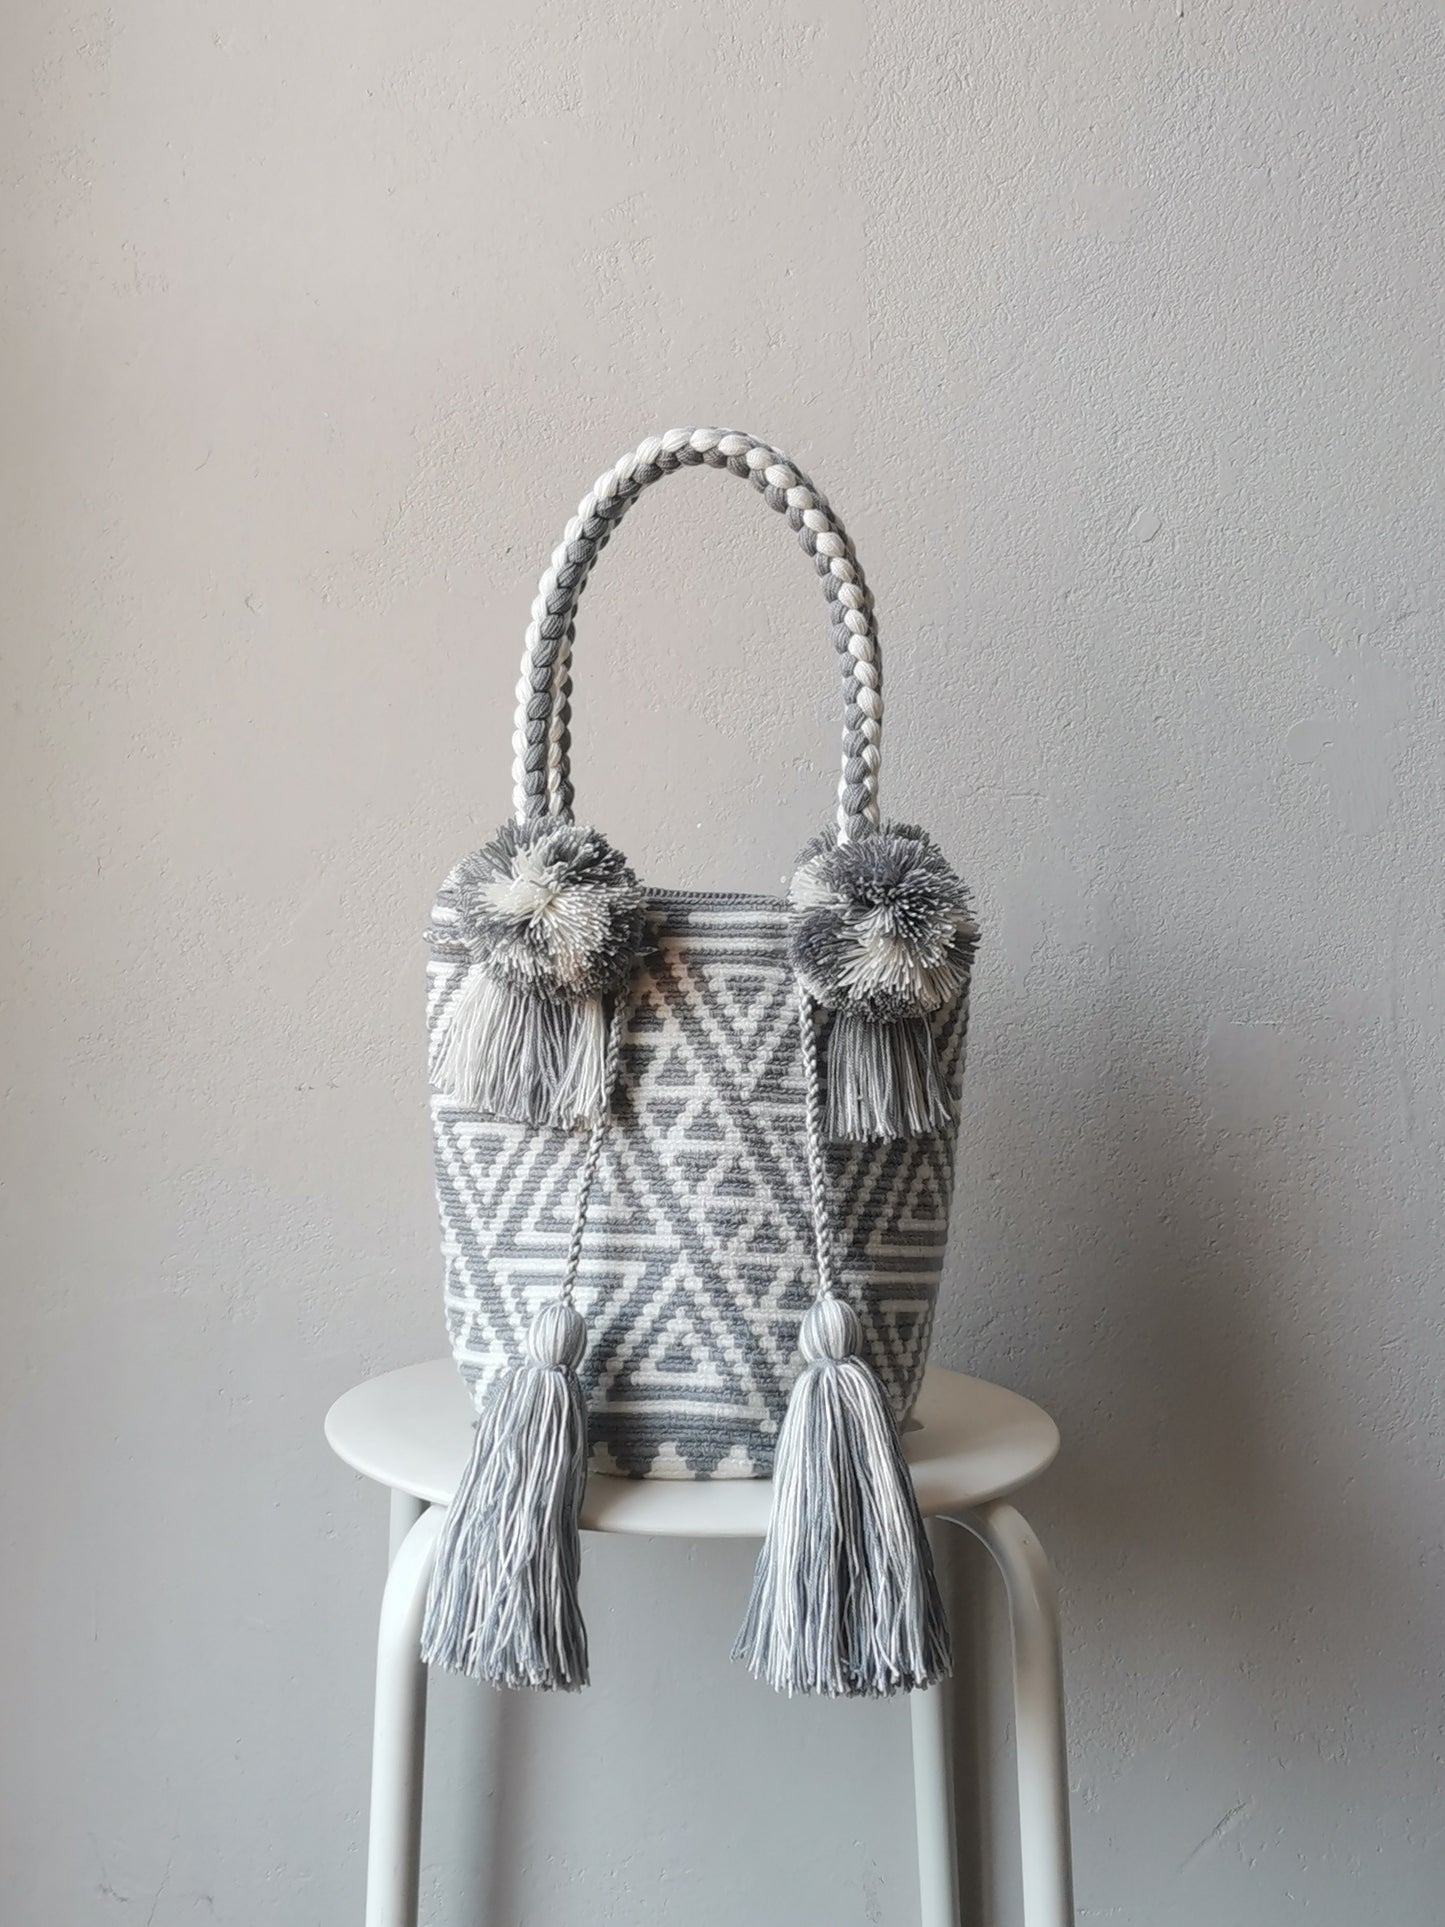 White and gray M mochila handbag